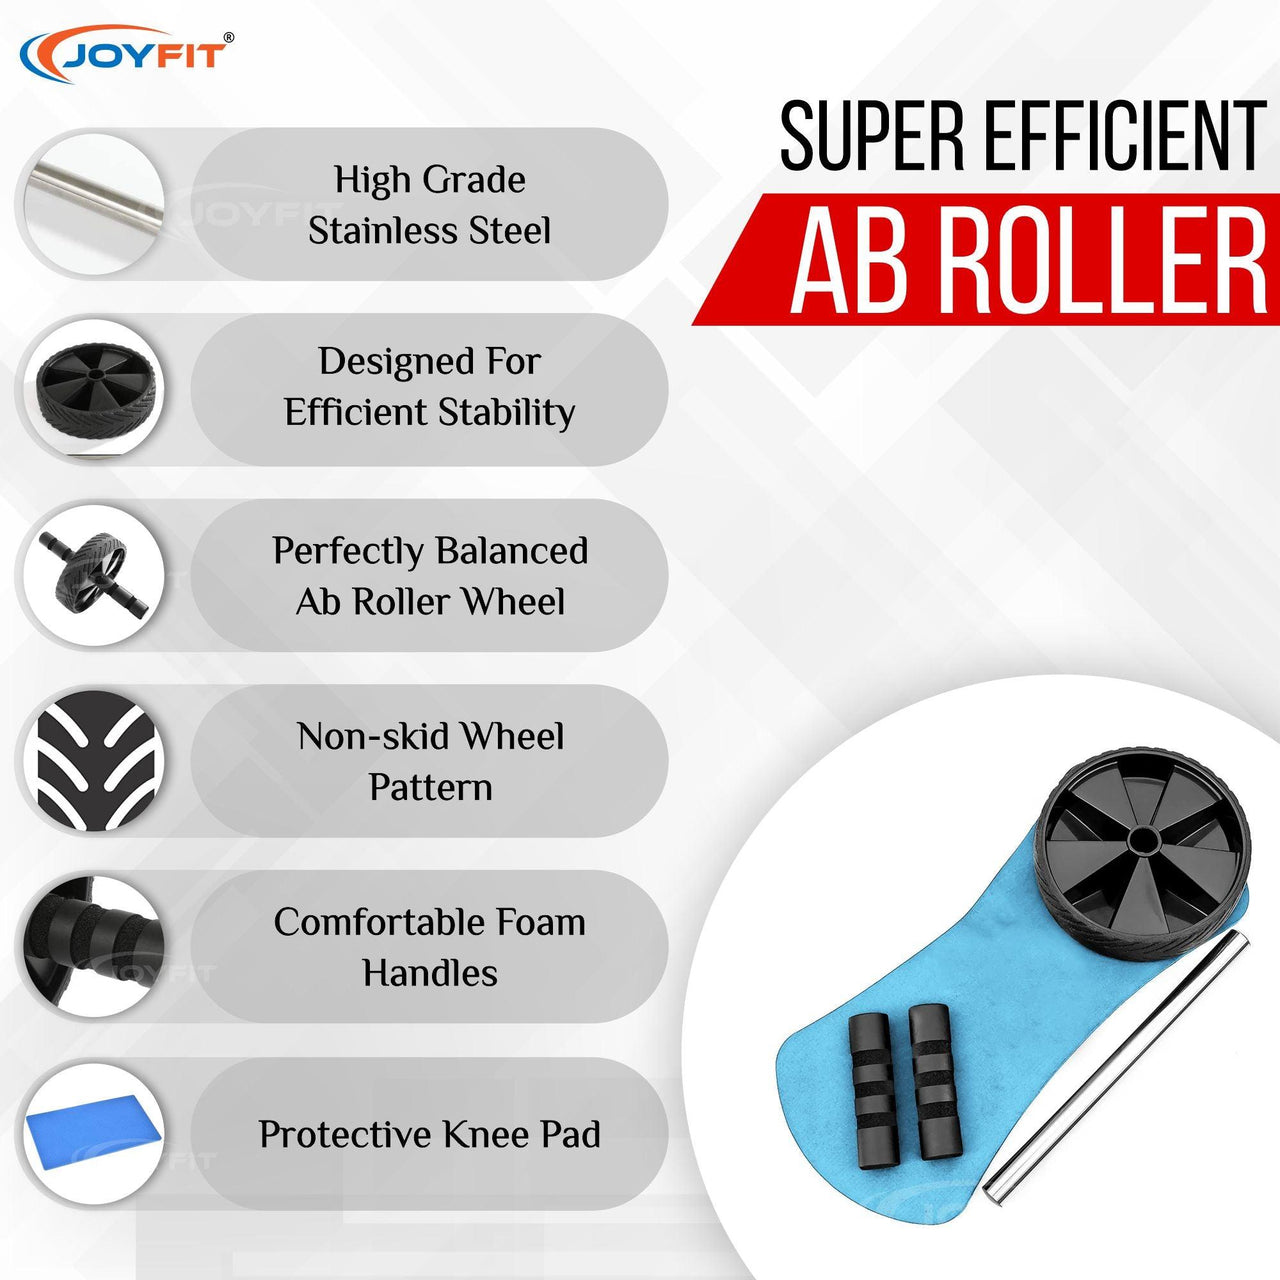 Premium Ab Roller for Core Strength